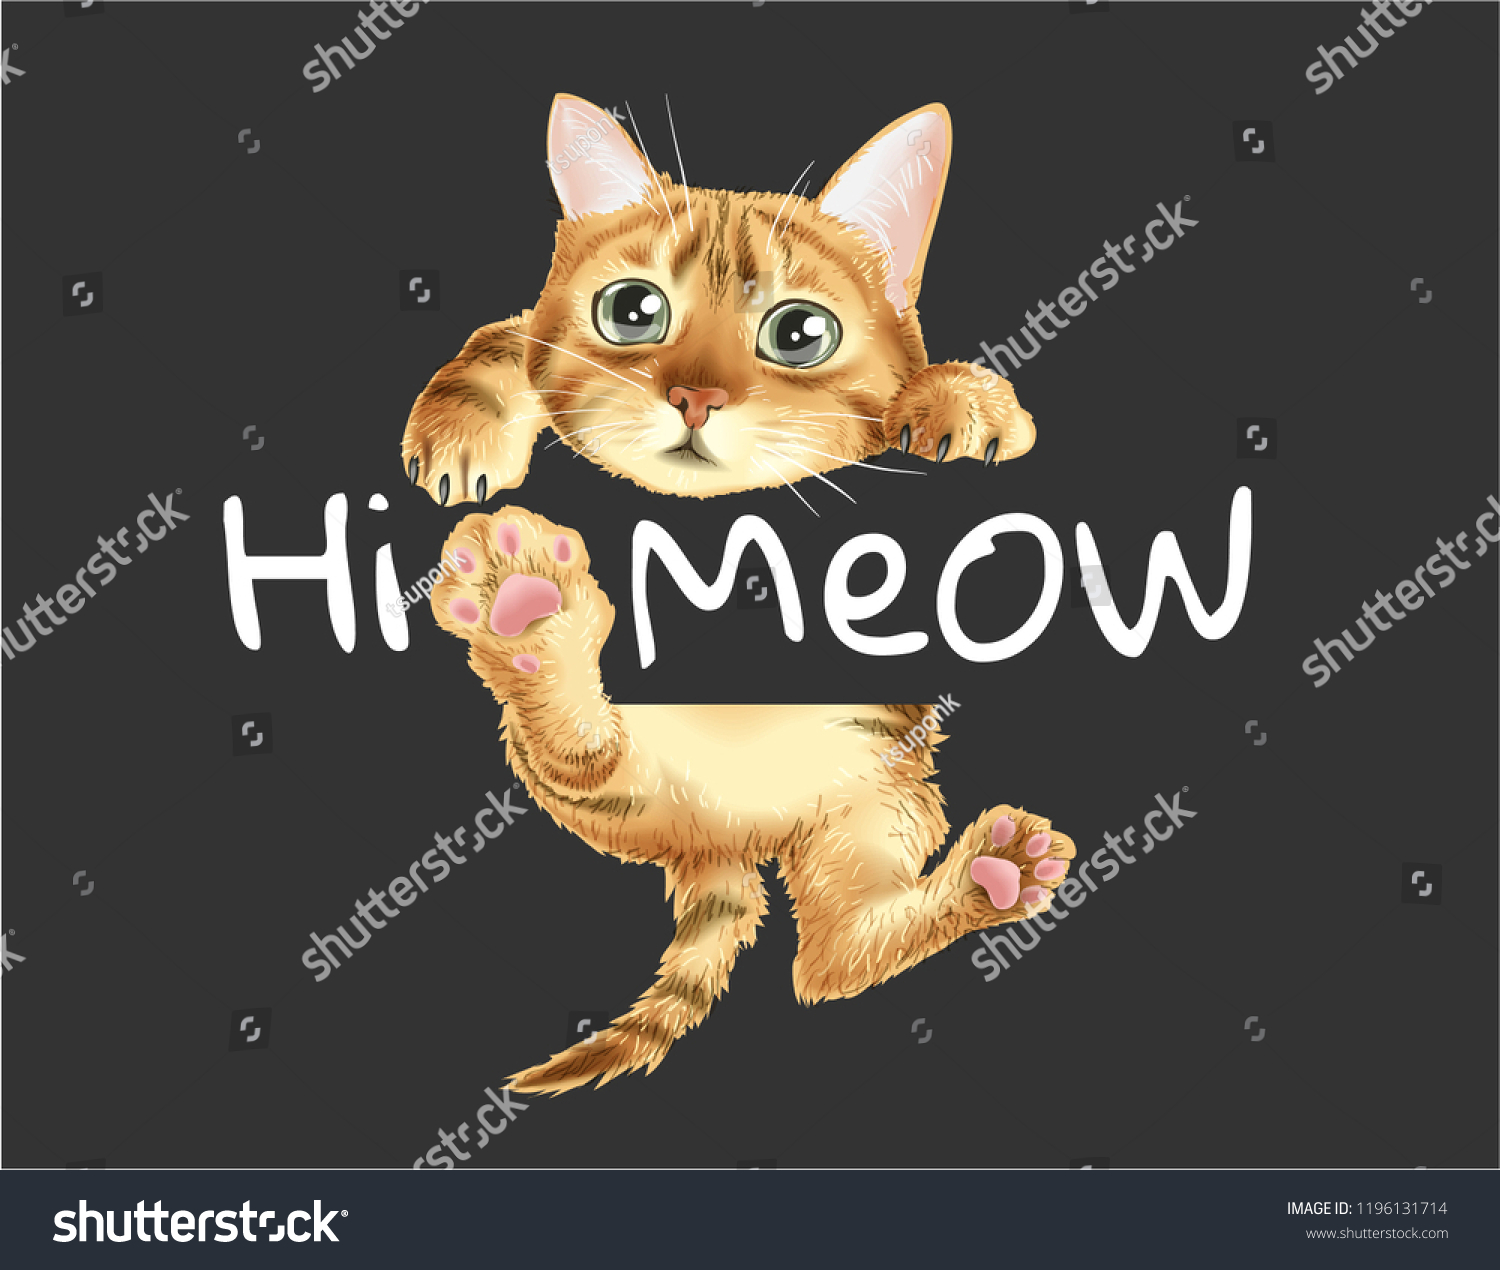 SVG of hi meow slogan with cat hanging illustration svg